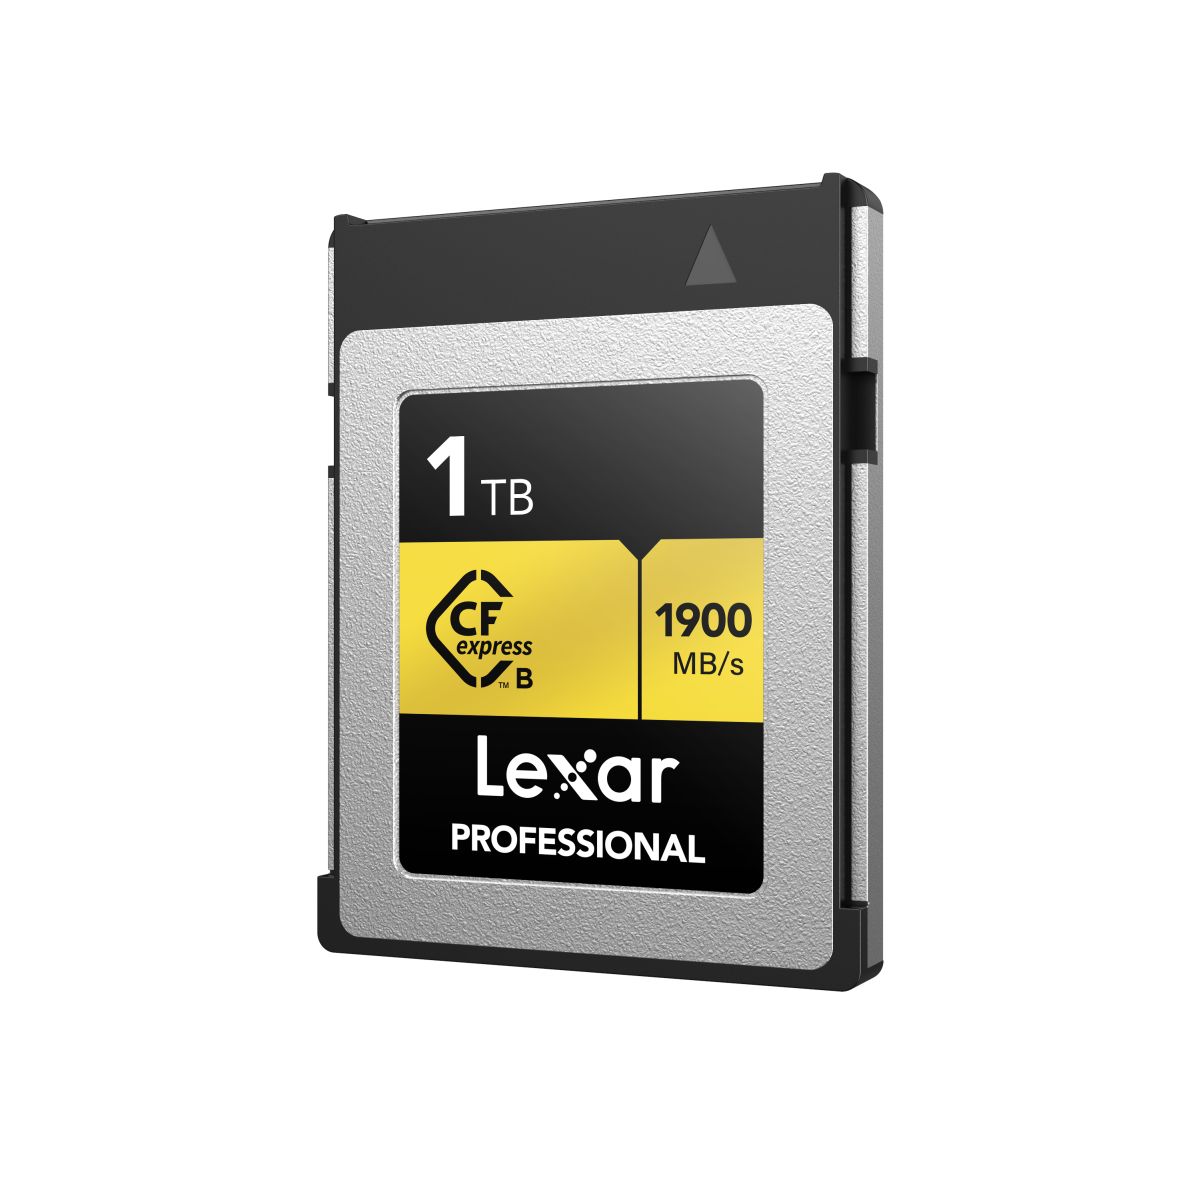 Lexar 1TB CFexpress PRO Gold Type B 1900/1500 MB/s